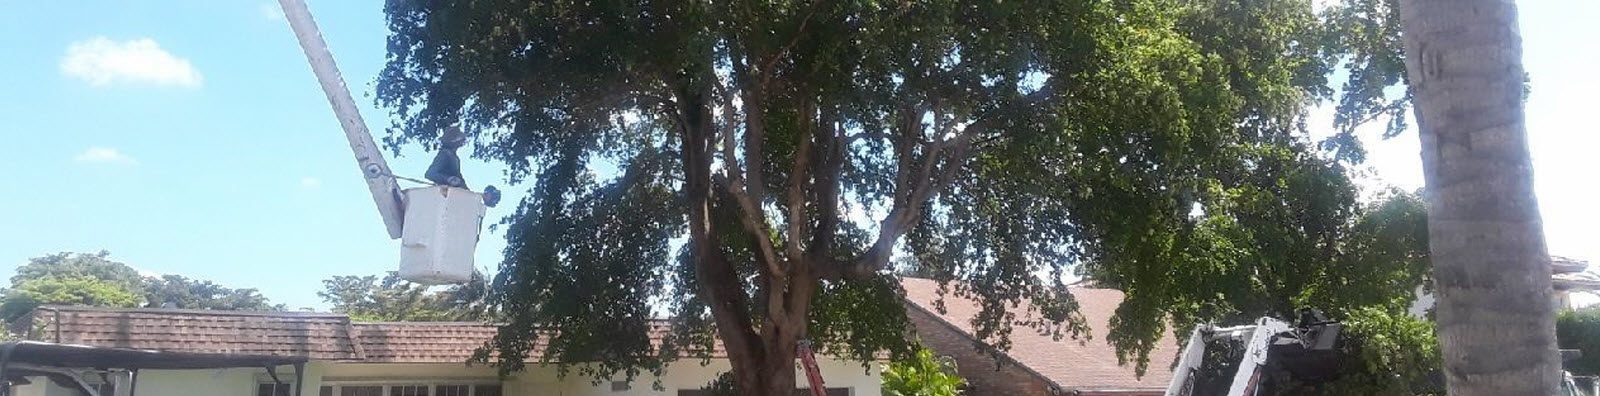 Tree Trimming & Pruning in Loxahatchee, FL - SaveMore Tree Service